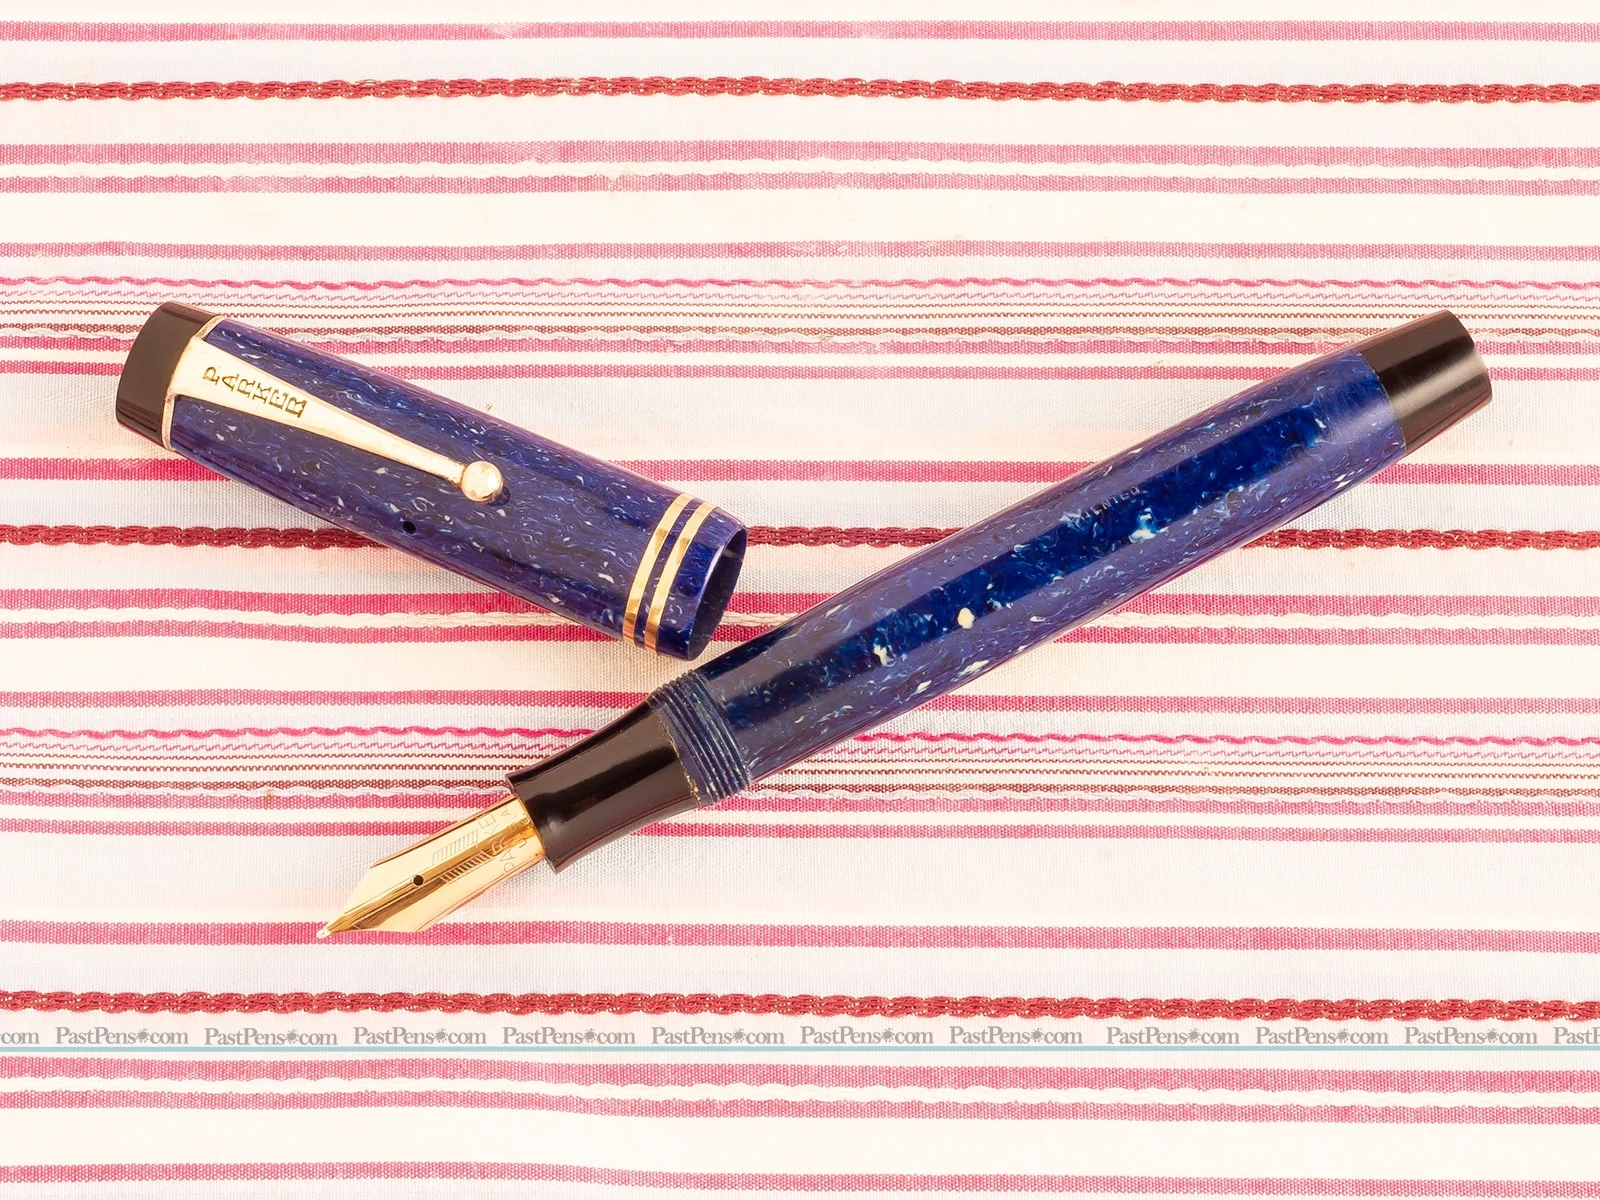 parker duofold senior lapis lazuli blue streamlined fountain pen vintage pk156 model